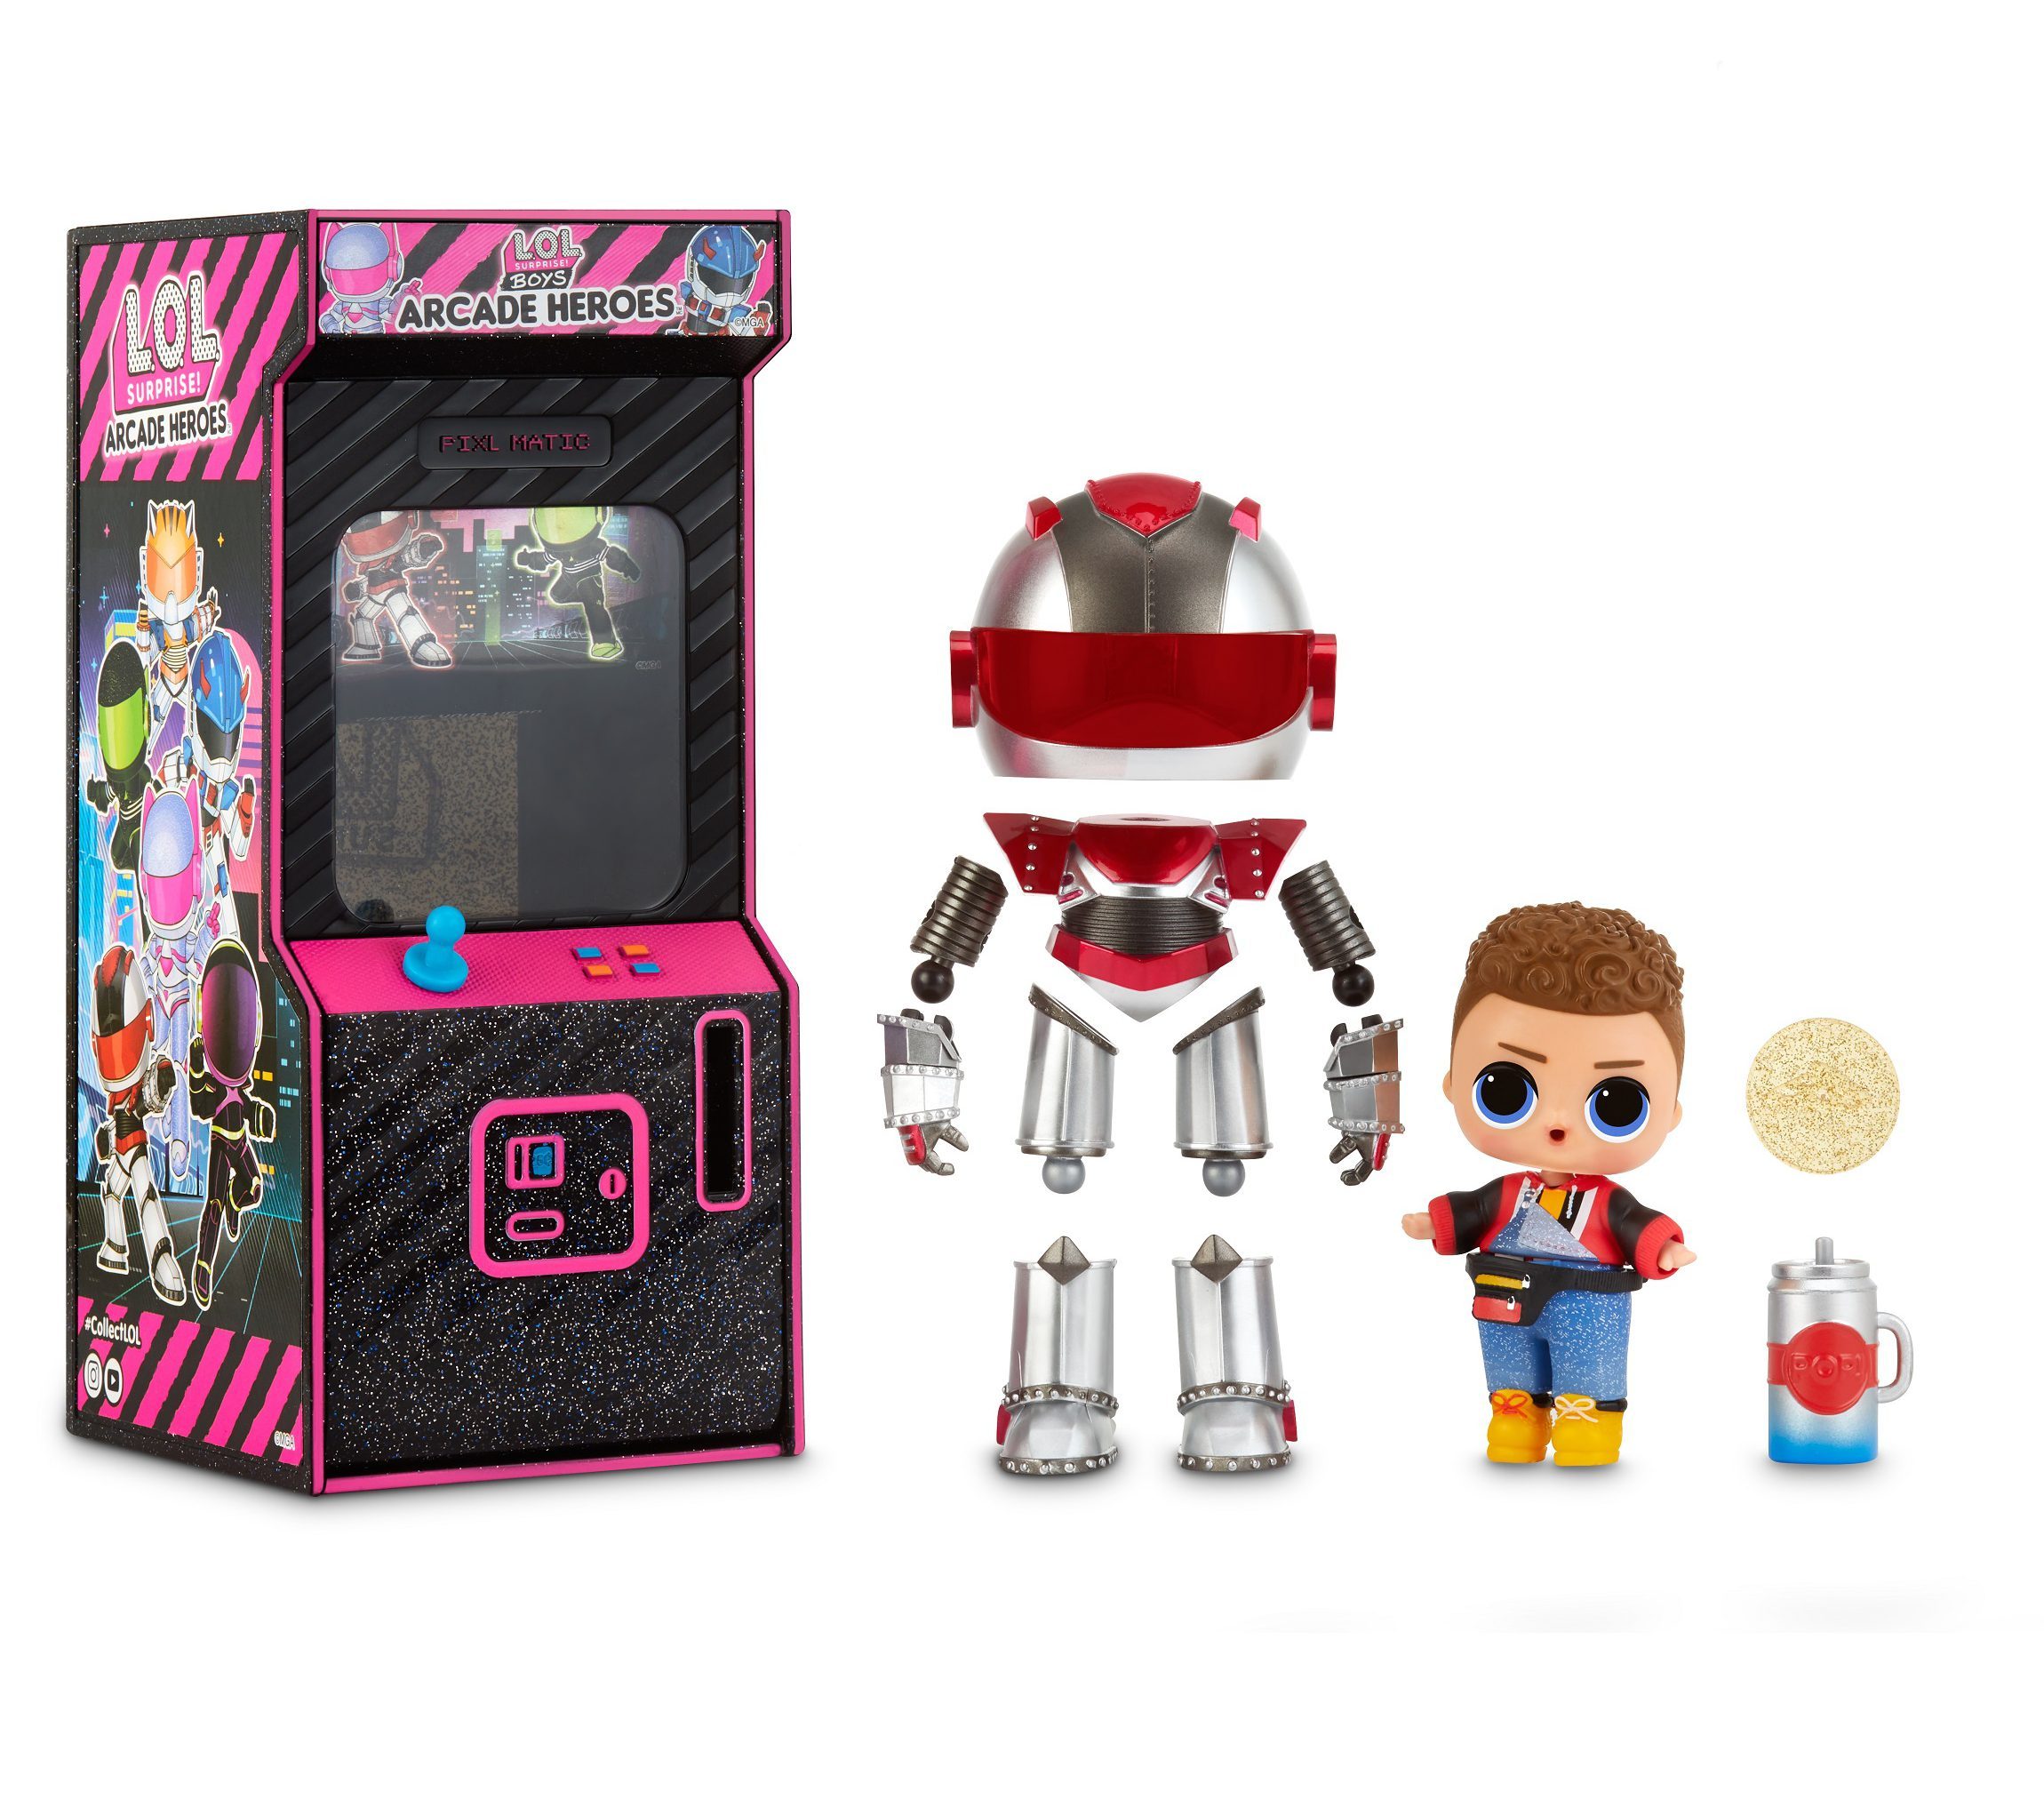 L.O.L. Surprise! Boys Arcade Heroes Action Figure Doll